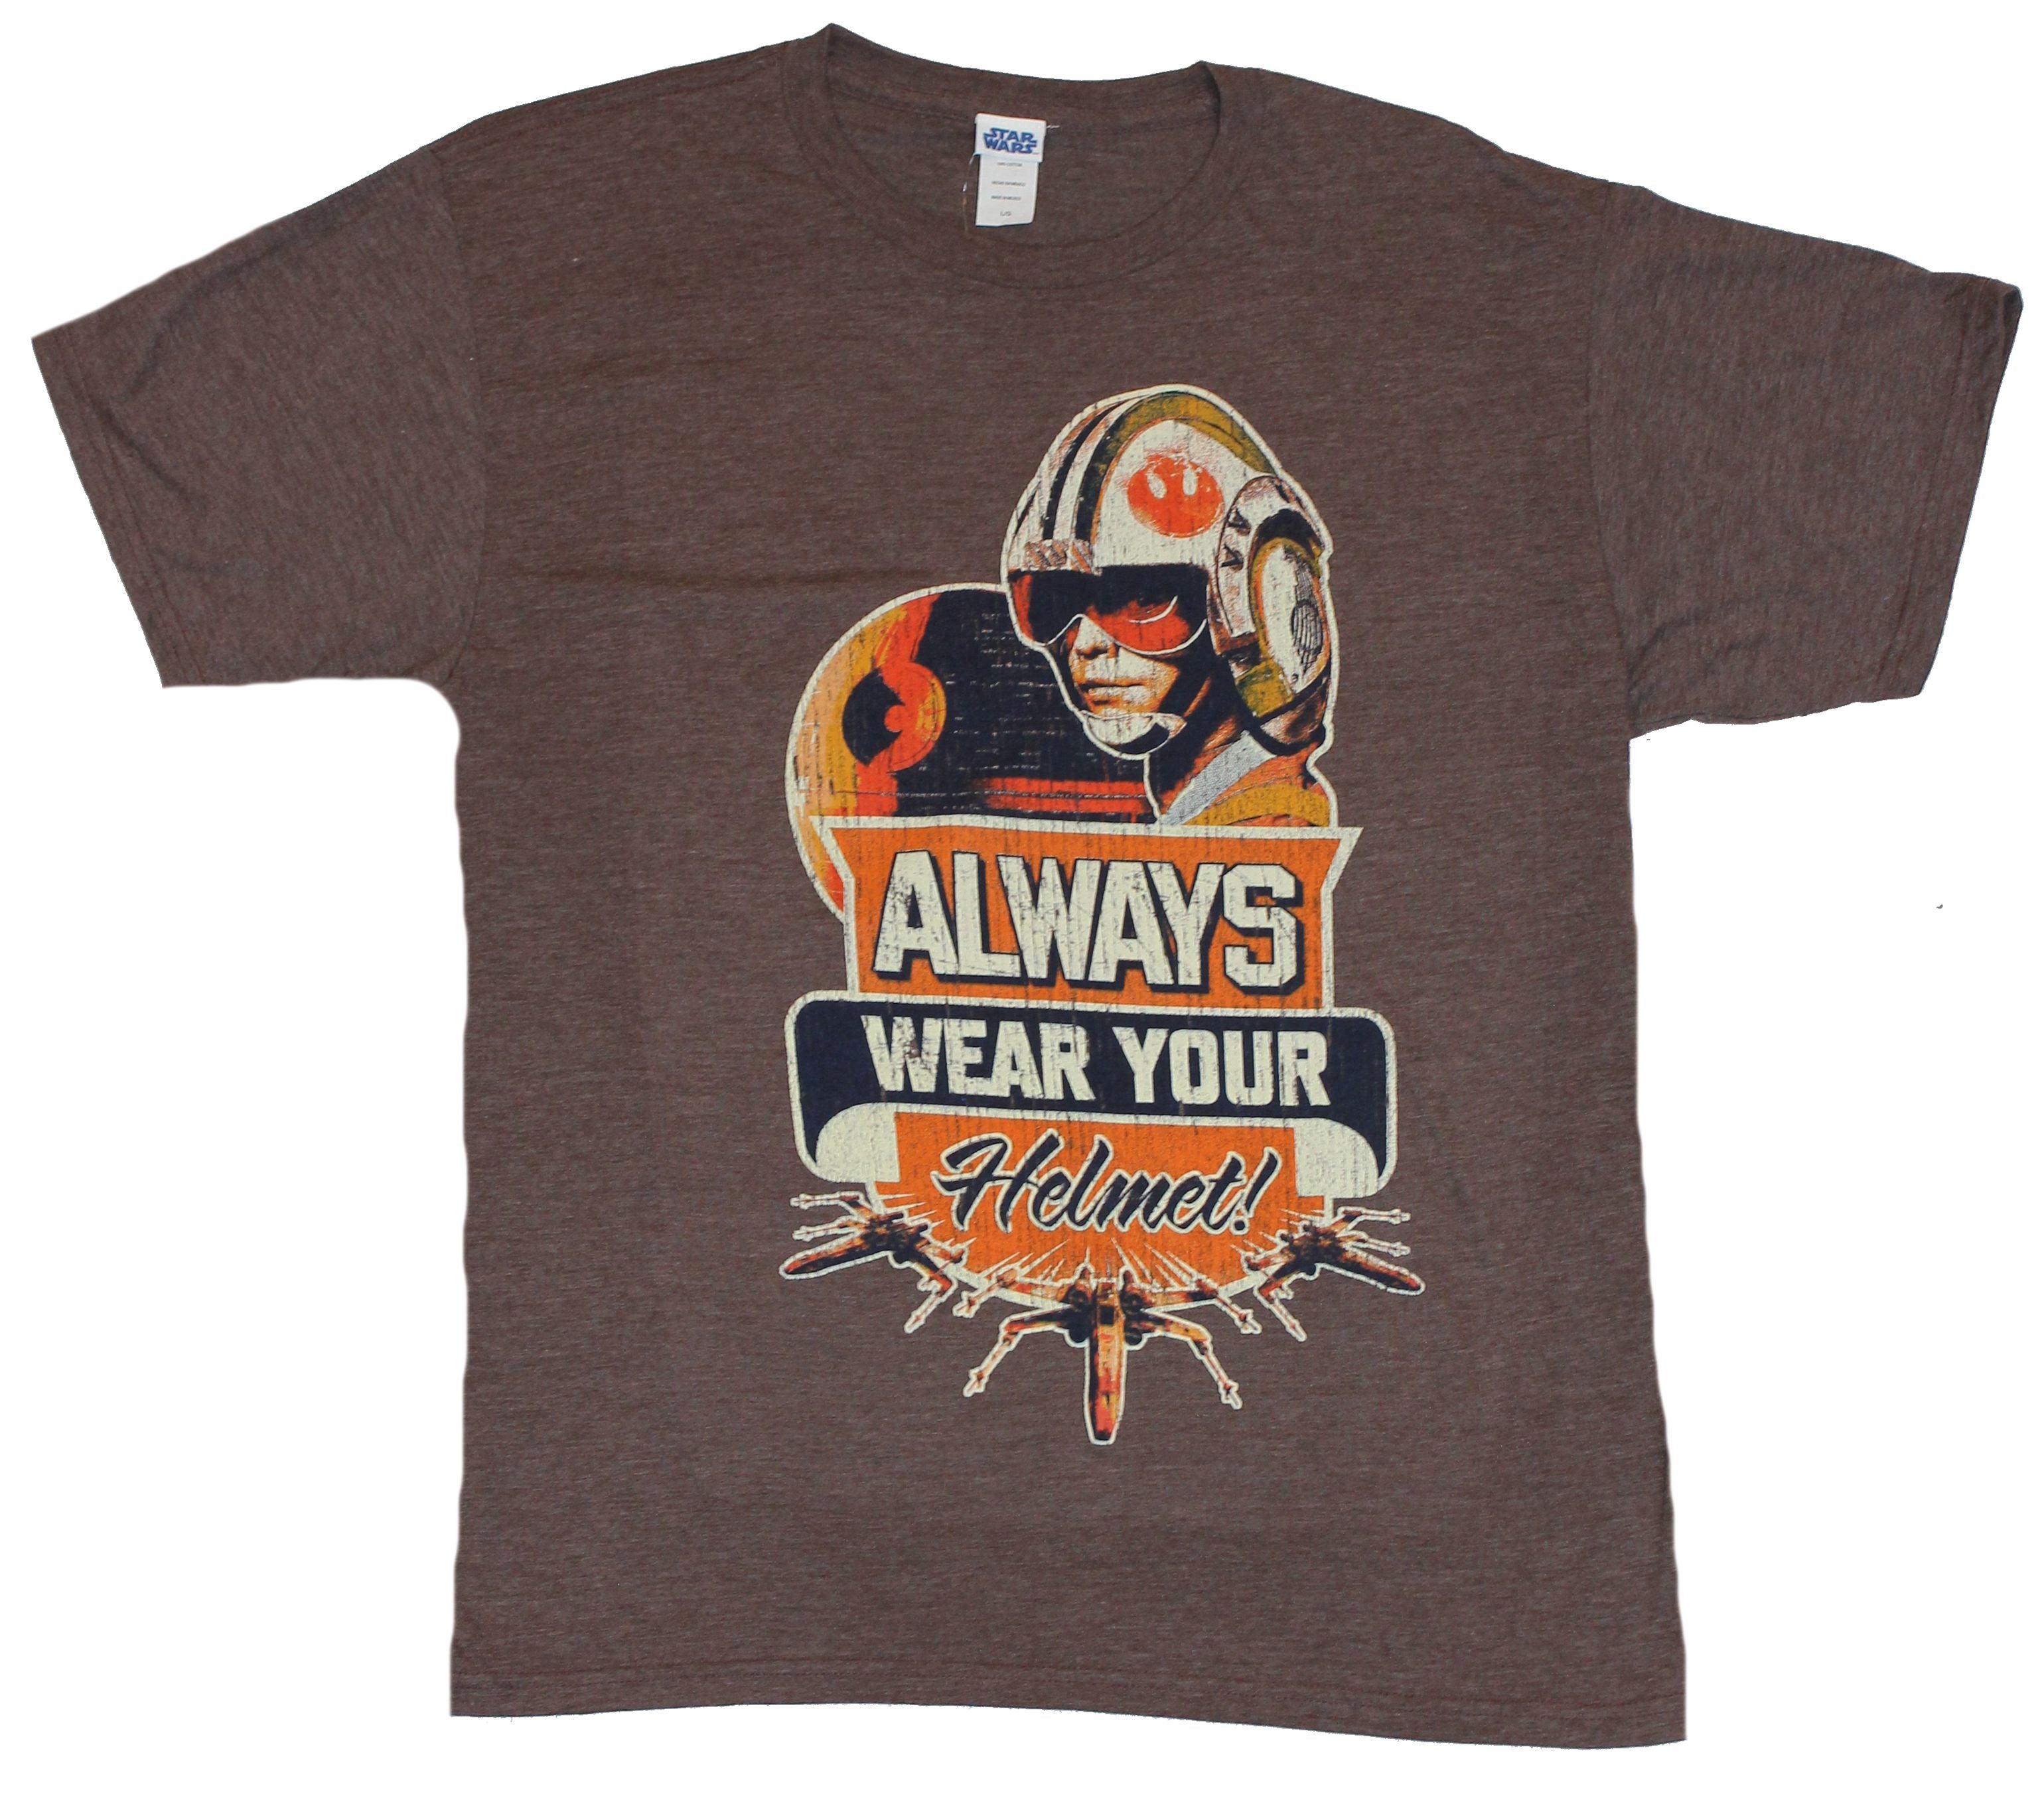 Star Wars Mens T-Shirt - "Always Wear Your Helmet" Distressed X-Wing Luke Image